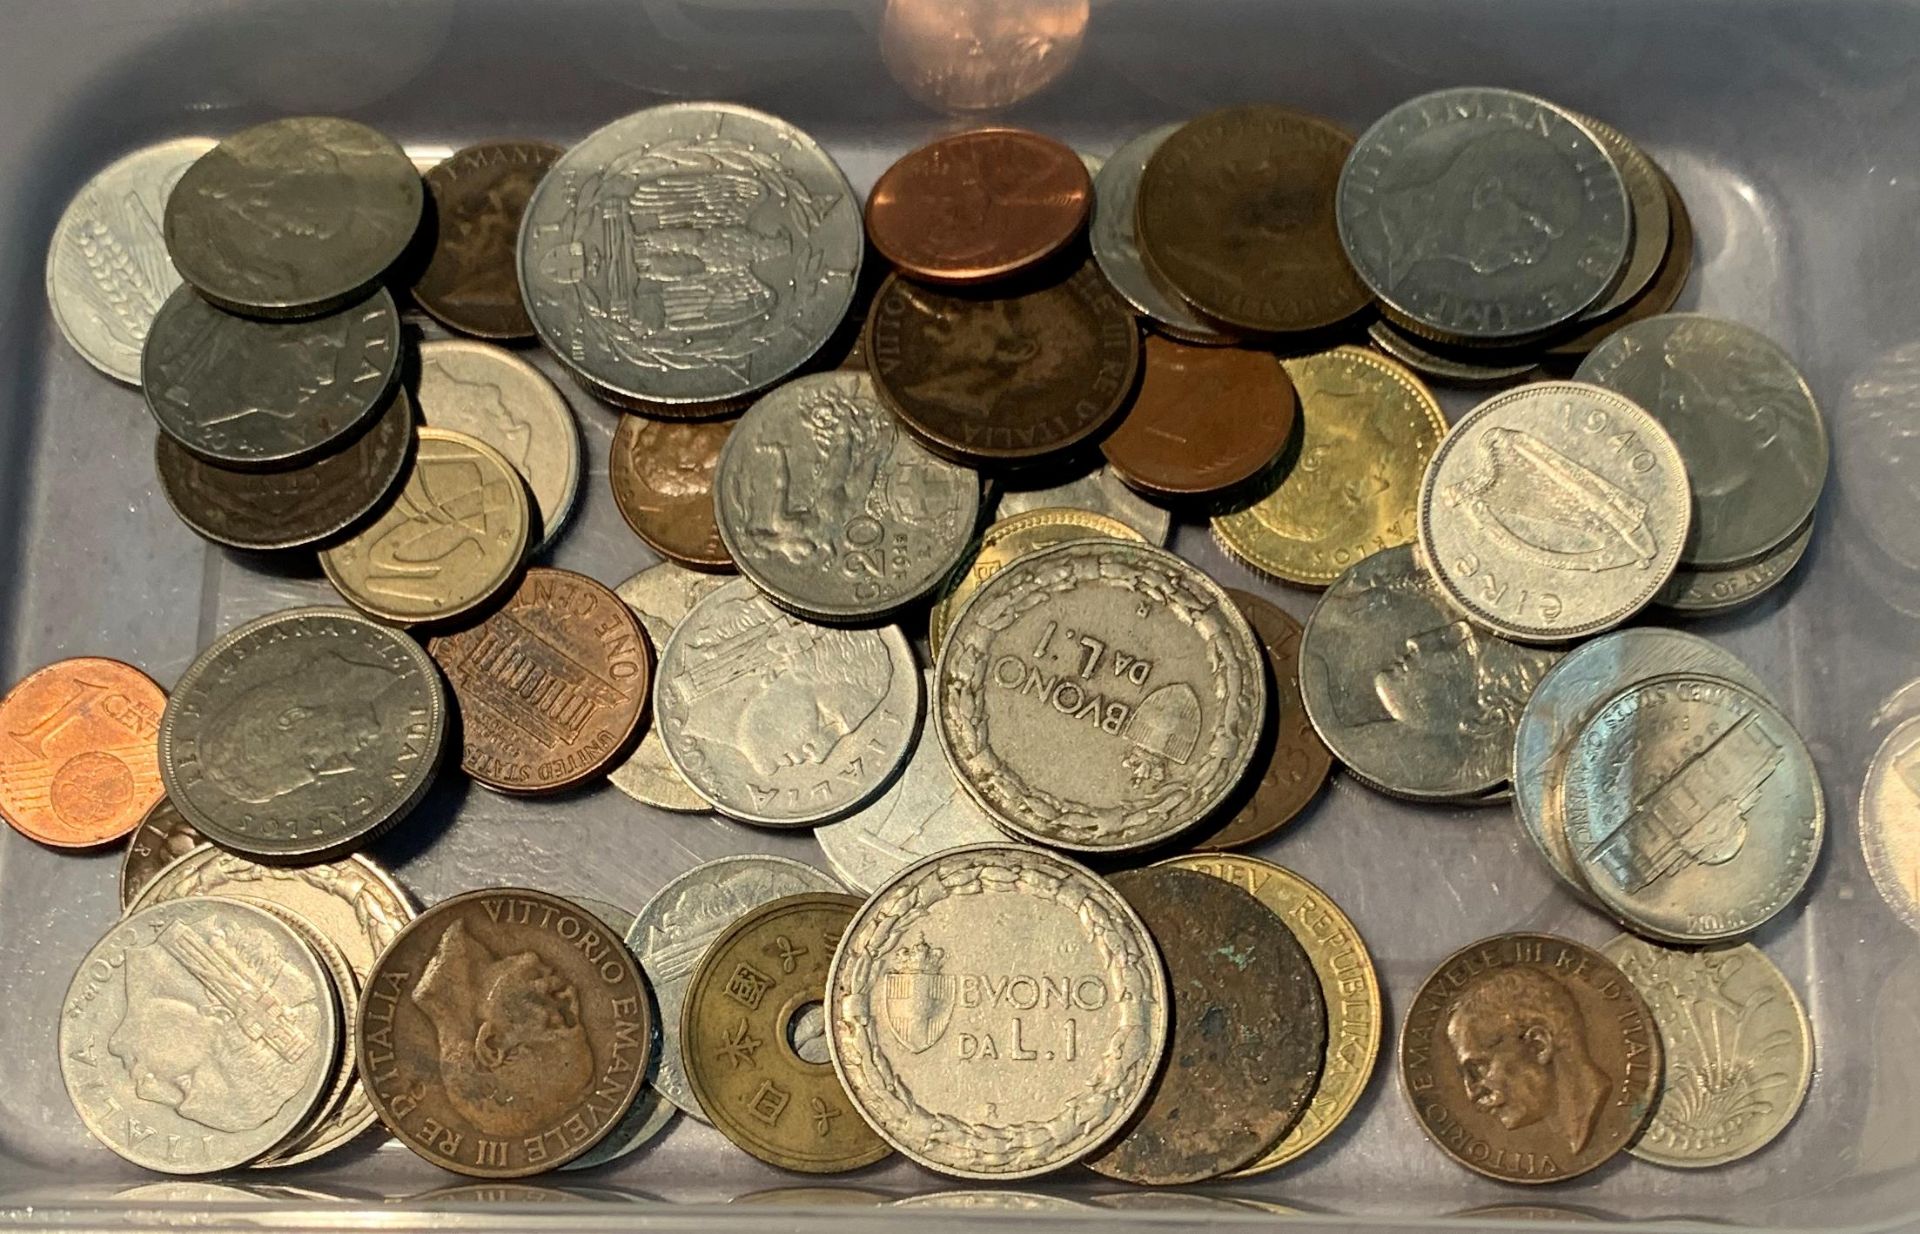 Contents to tub - Italian lira coins,